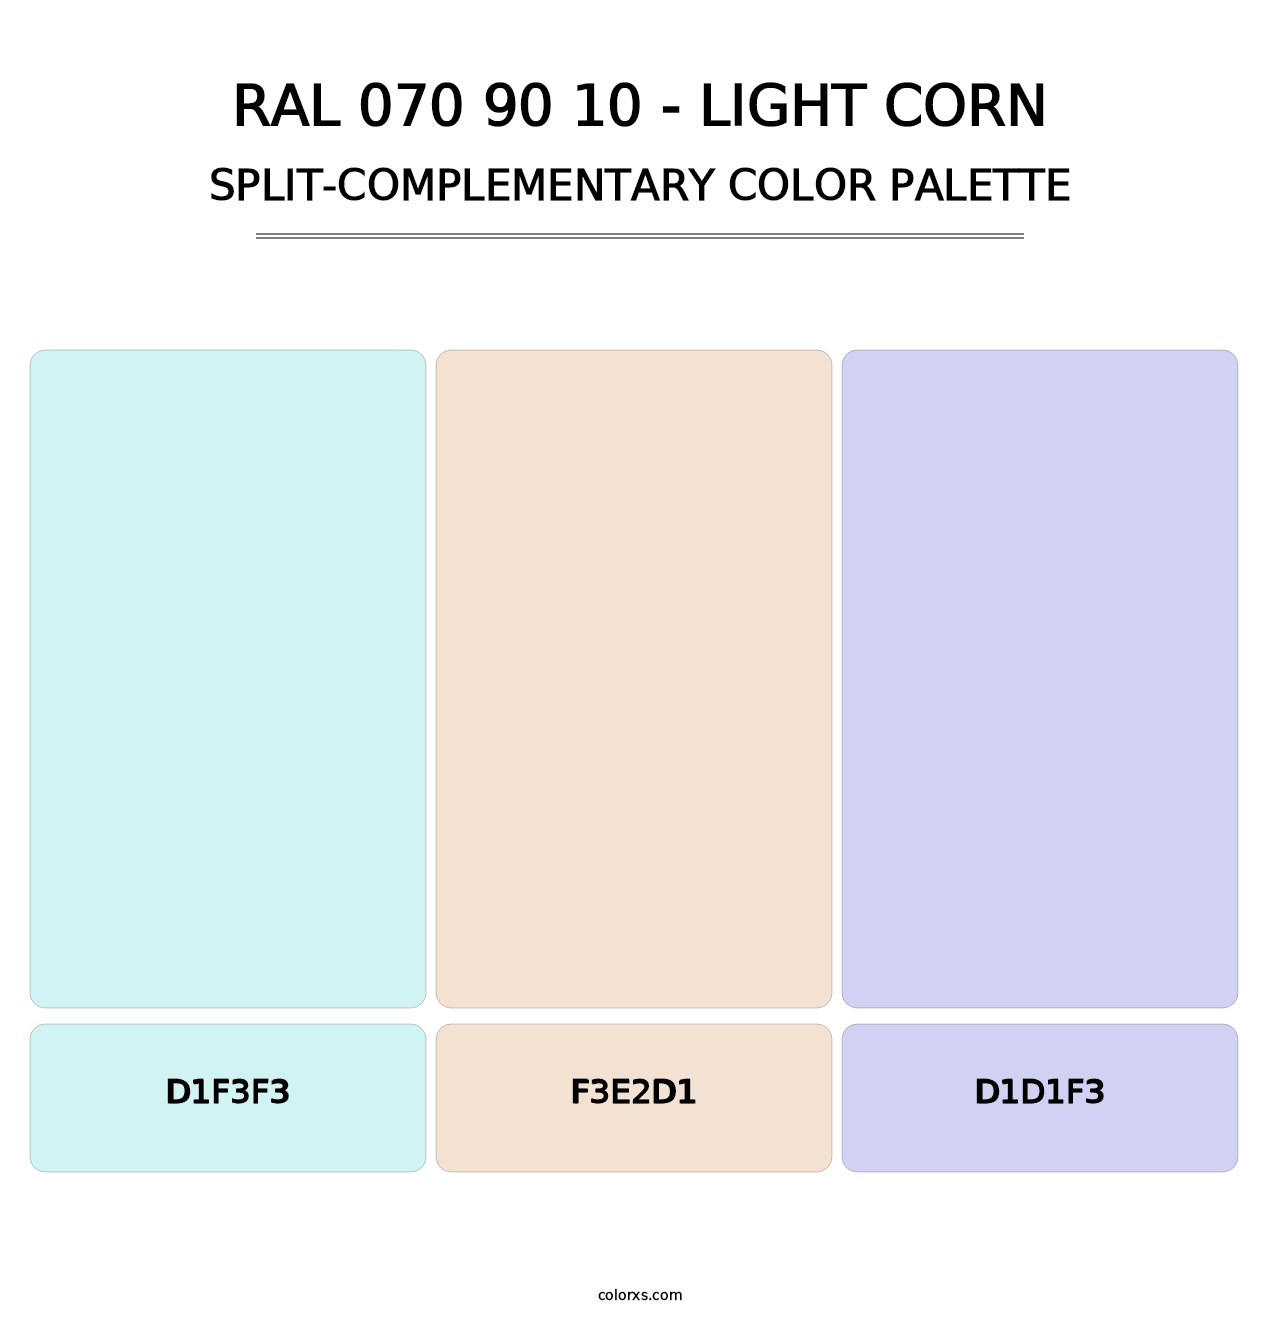 RAL 070 90 10 - Light Corn - Split-Complementary Color Palette